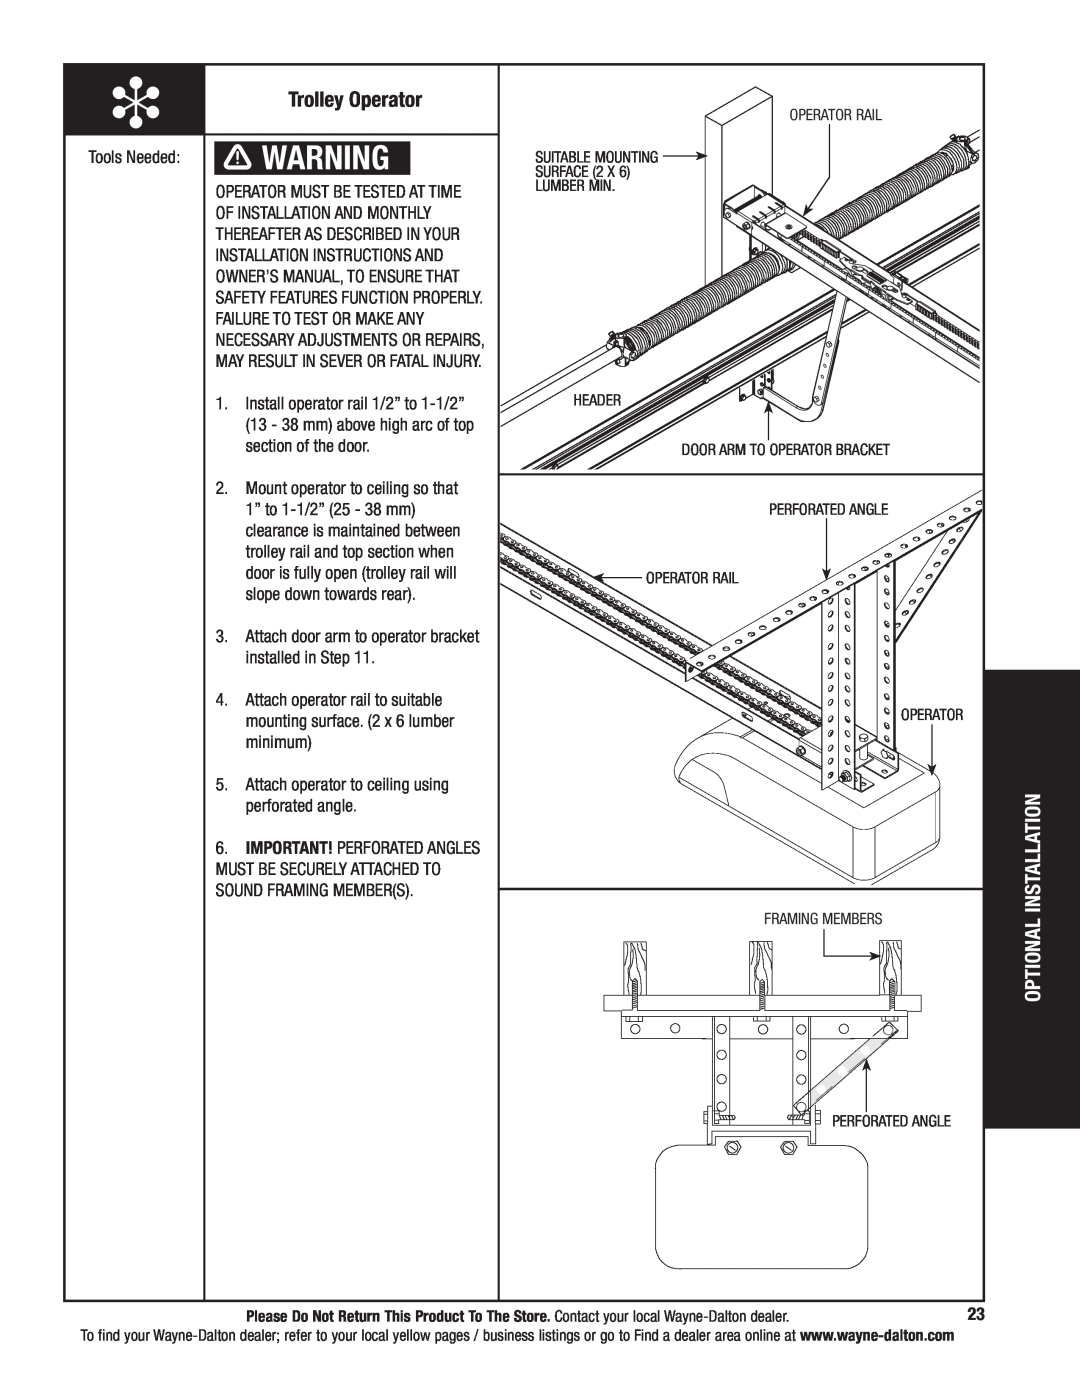 Wayne-Dalton 9800 installation instructions Trolley Operator, Optional Installation 